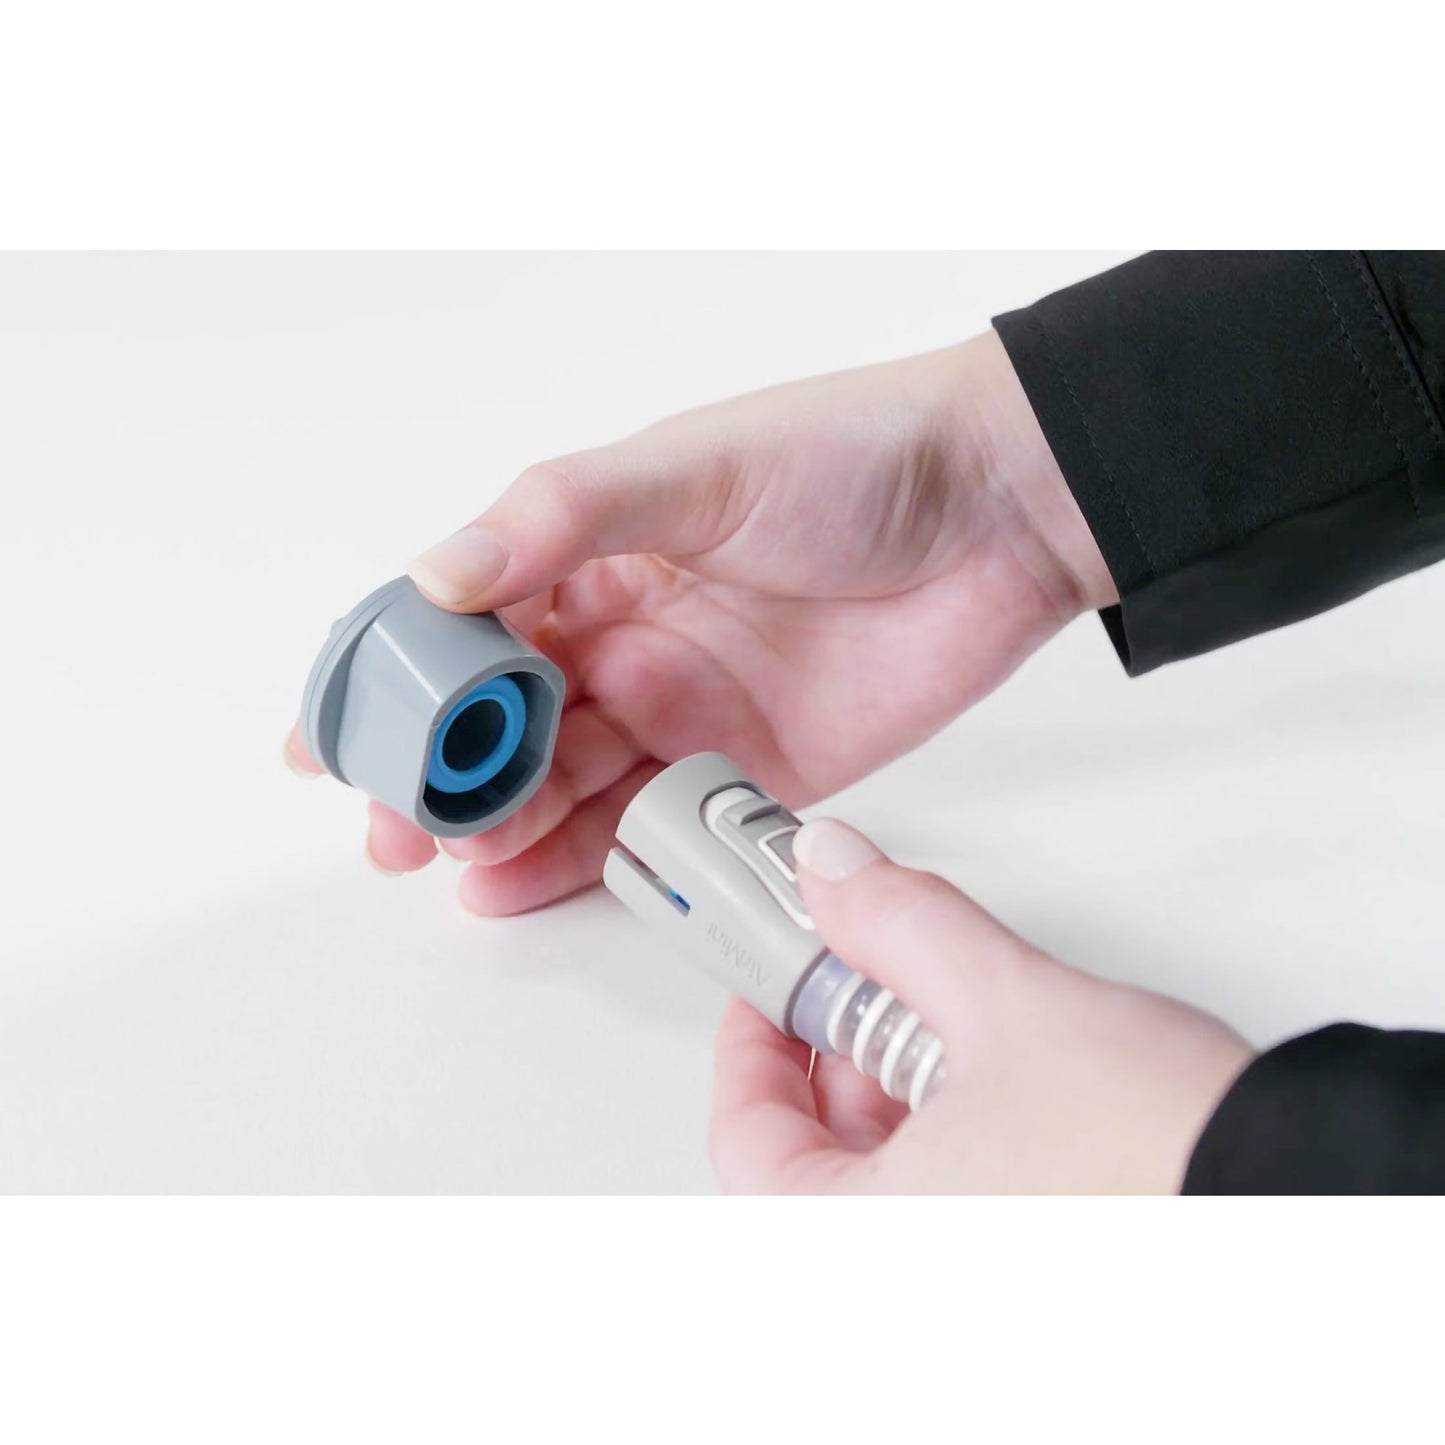 SoClean® CPAP Adapter